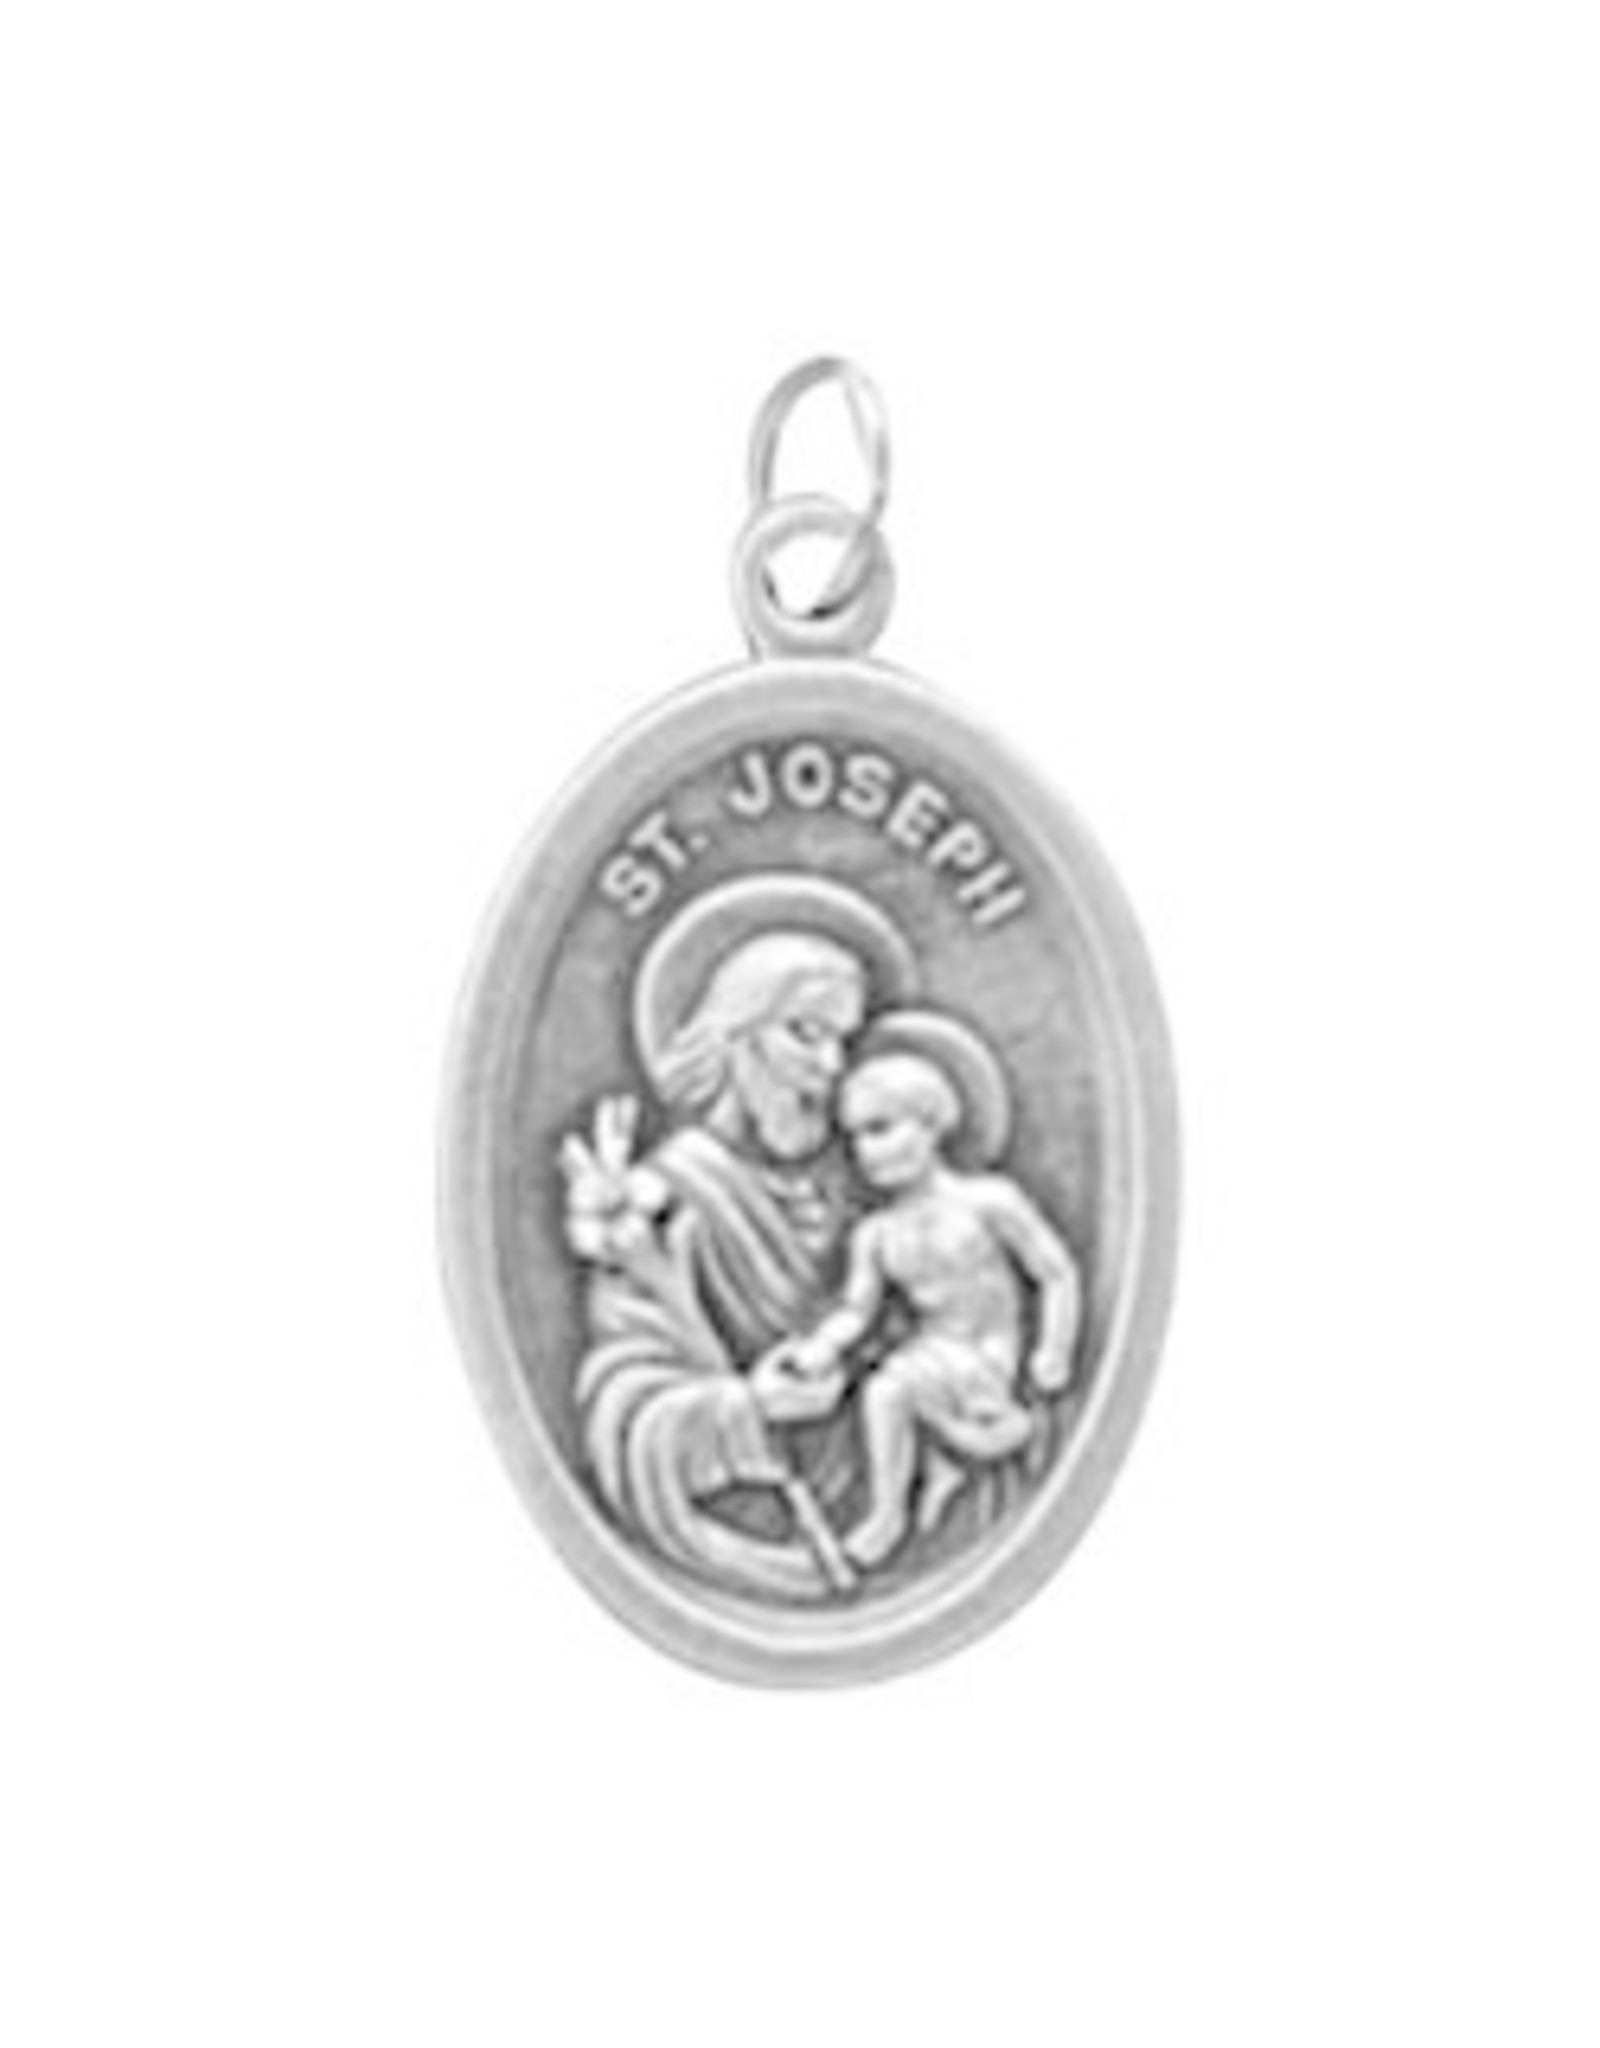 Christian Brands St. Joseph Medal, Oxidized Silver, 1"H